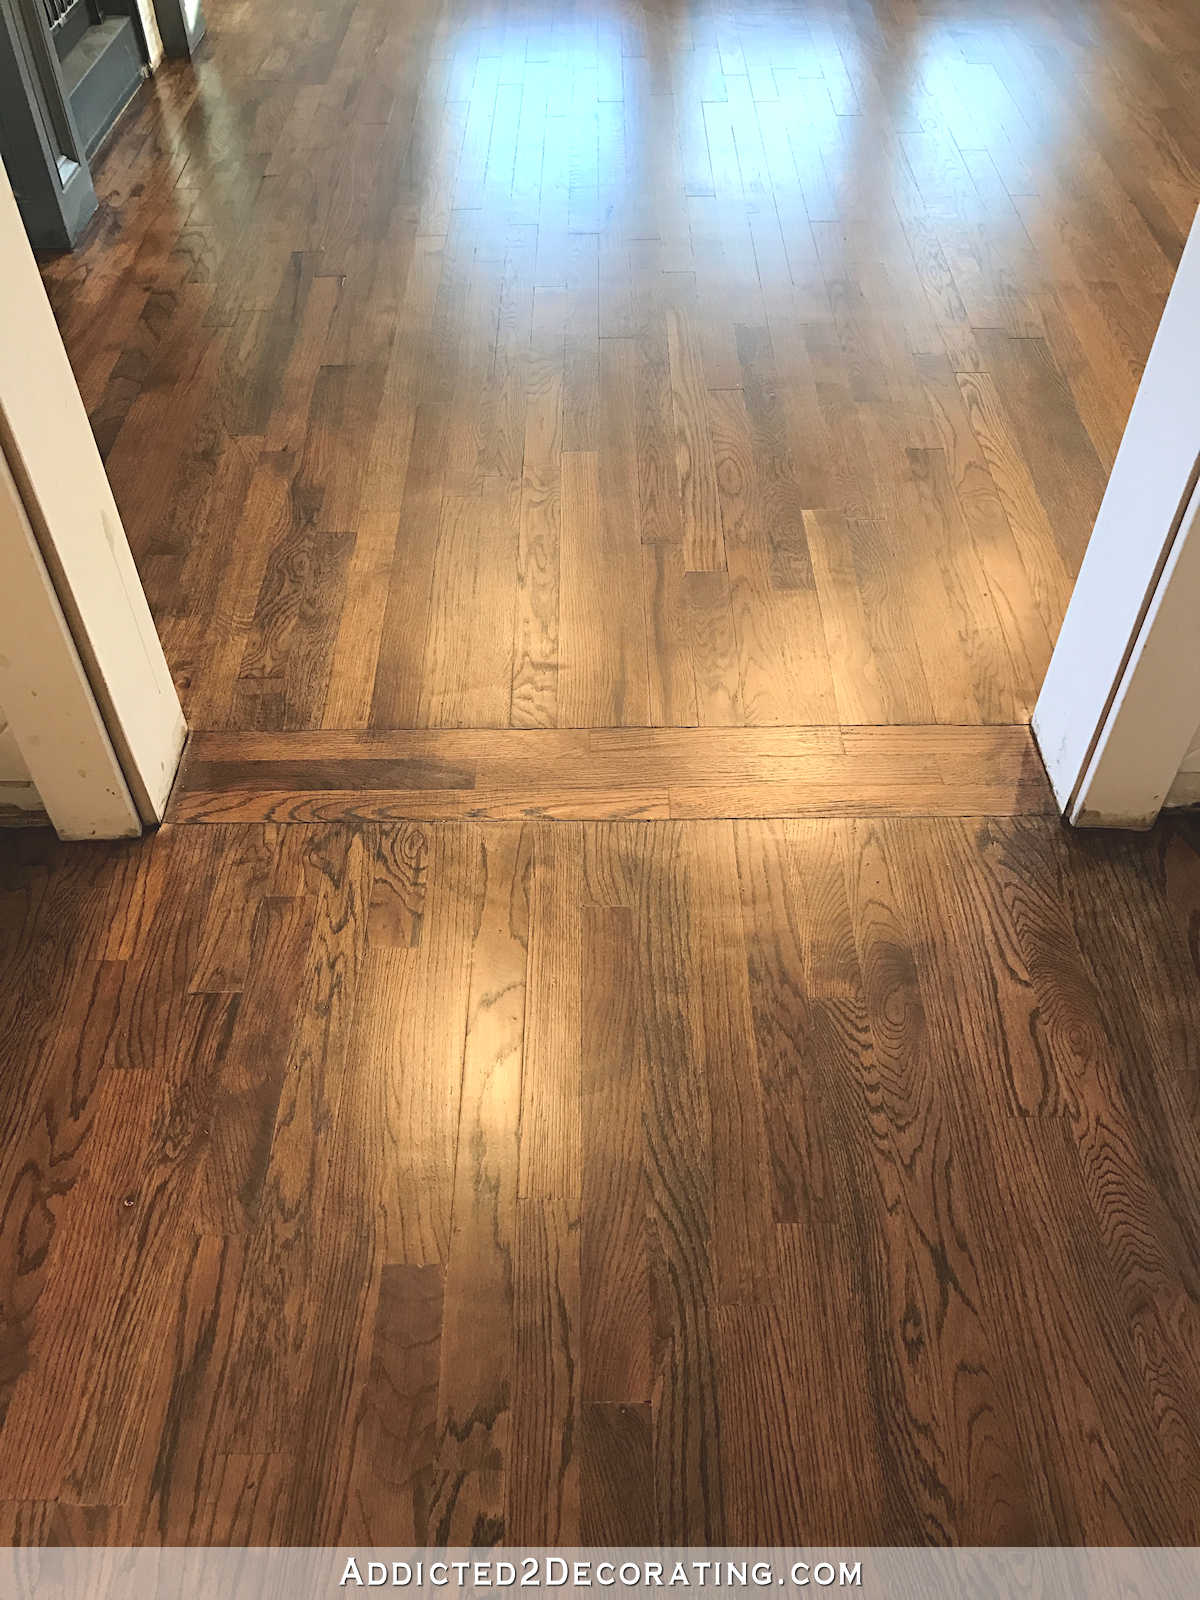 refinished red oak hardwood floors - kitchen and living room